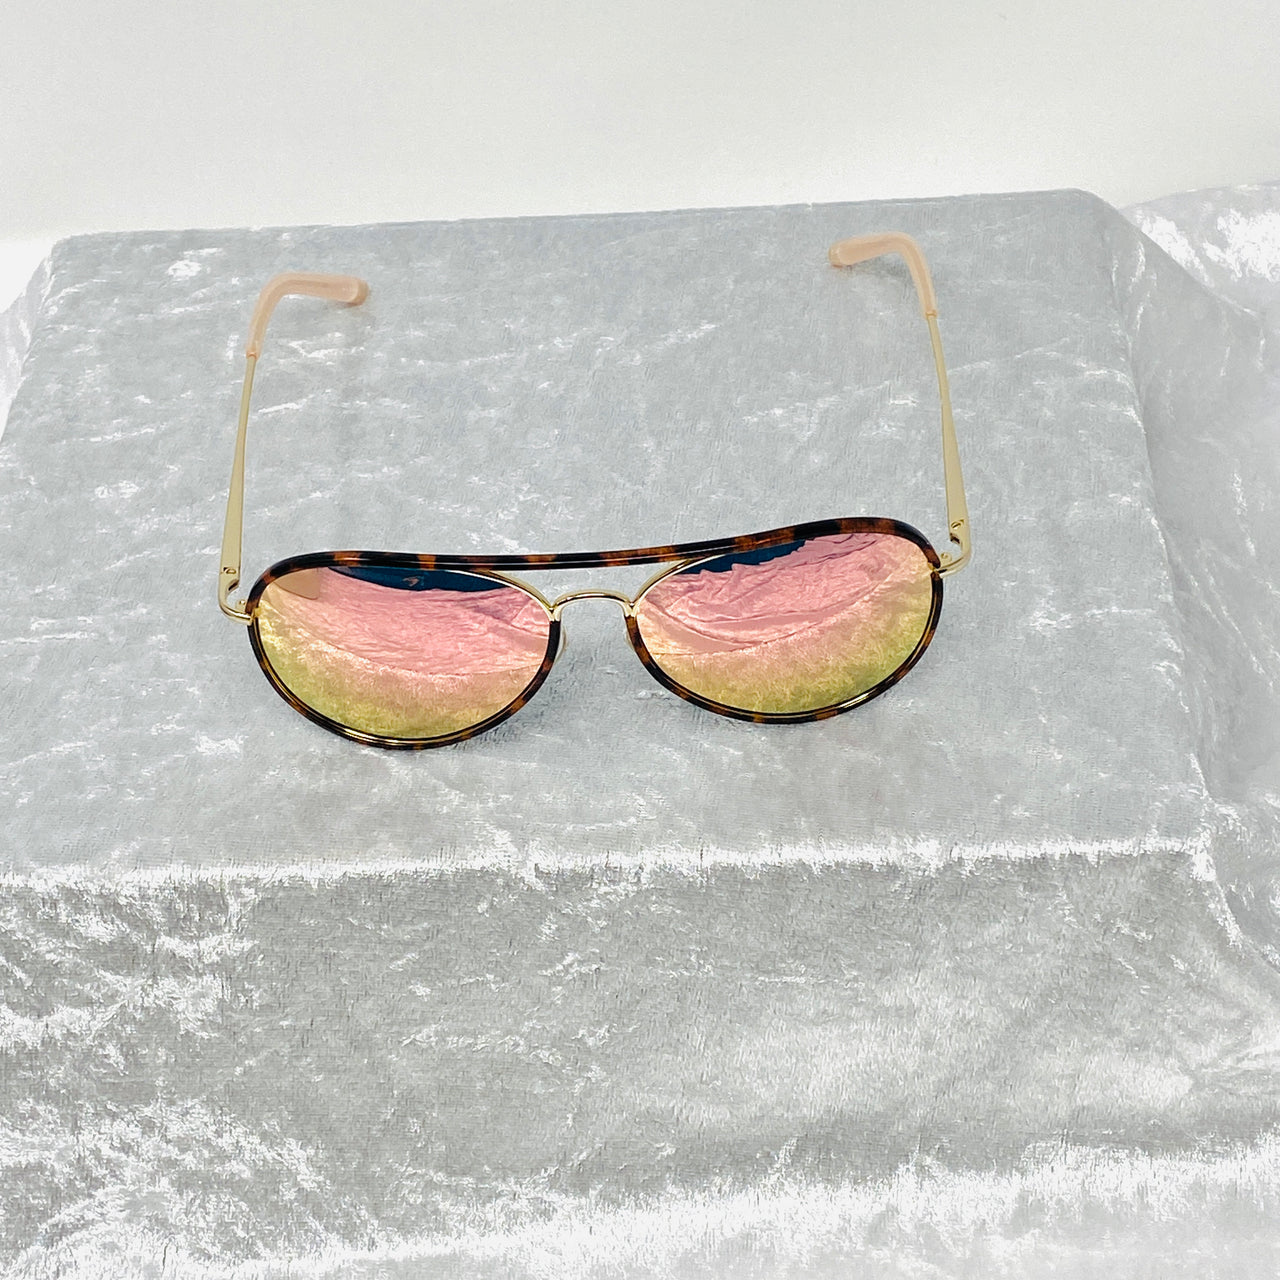 Matthew Williamson Ladies Sunglasses Tortoise Shell and Pink MW154C6SUN